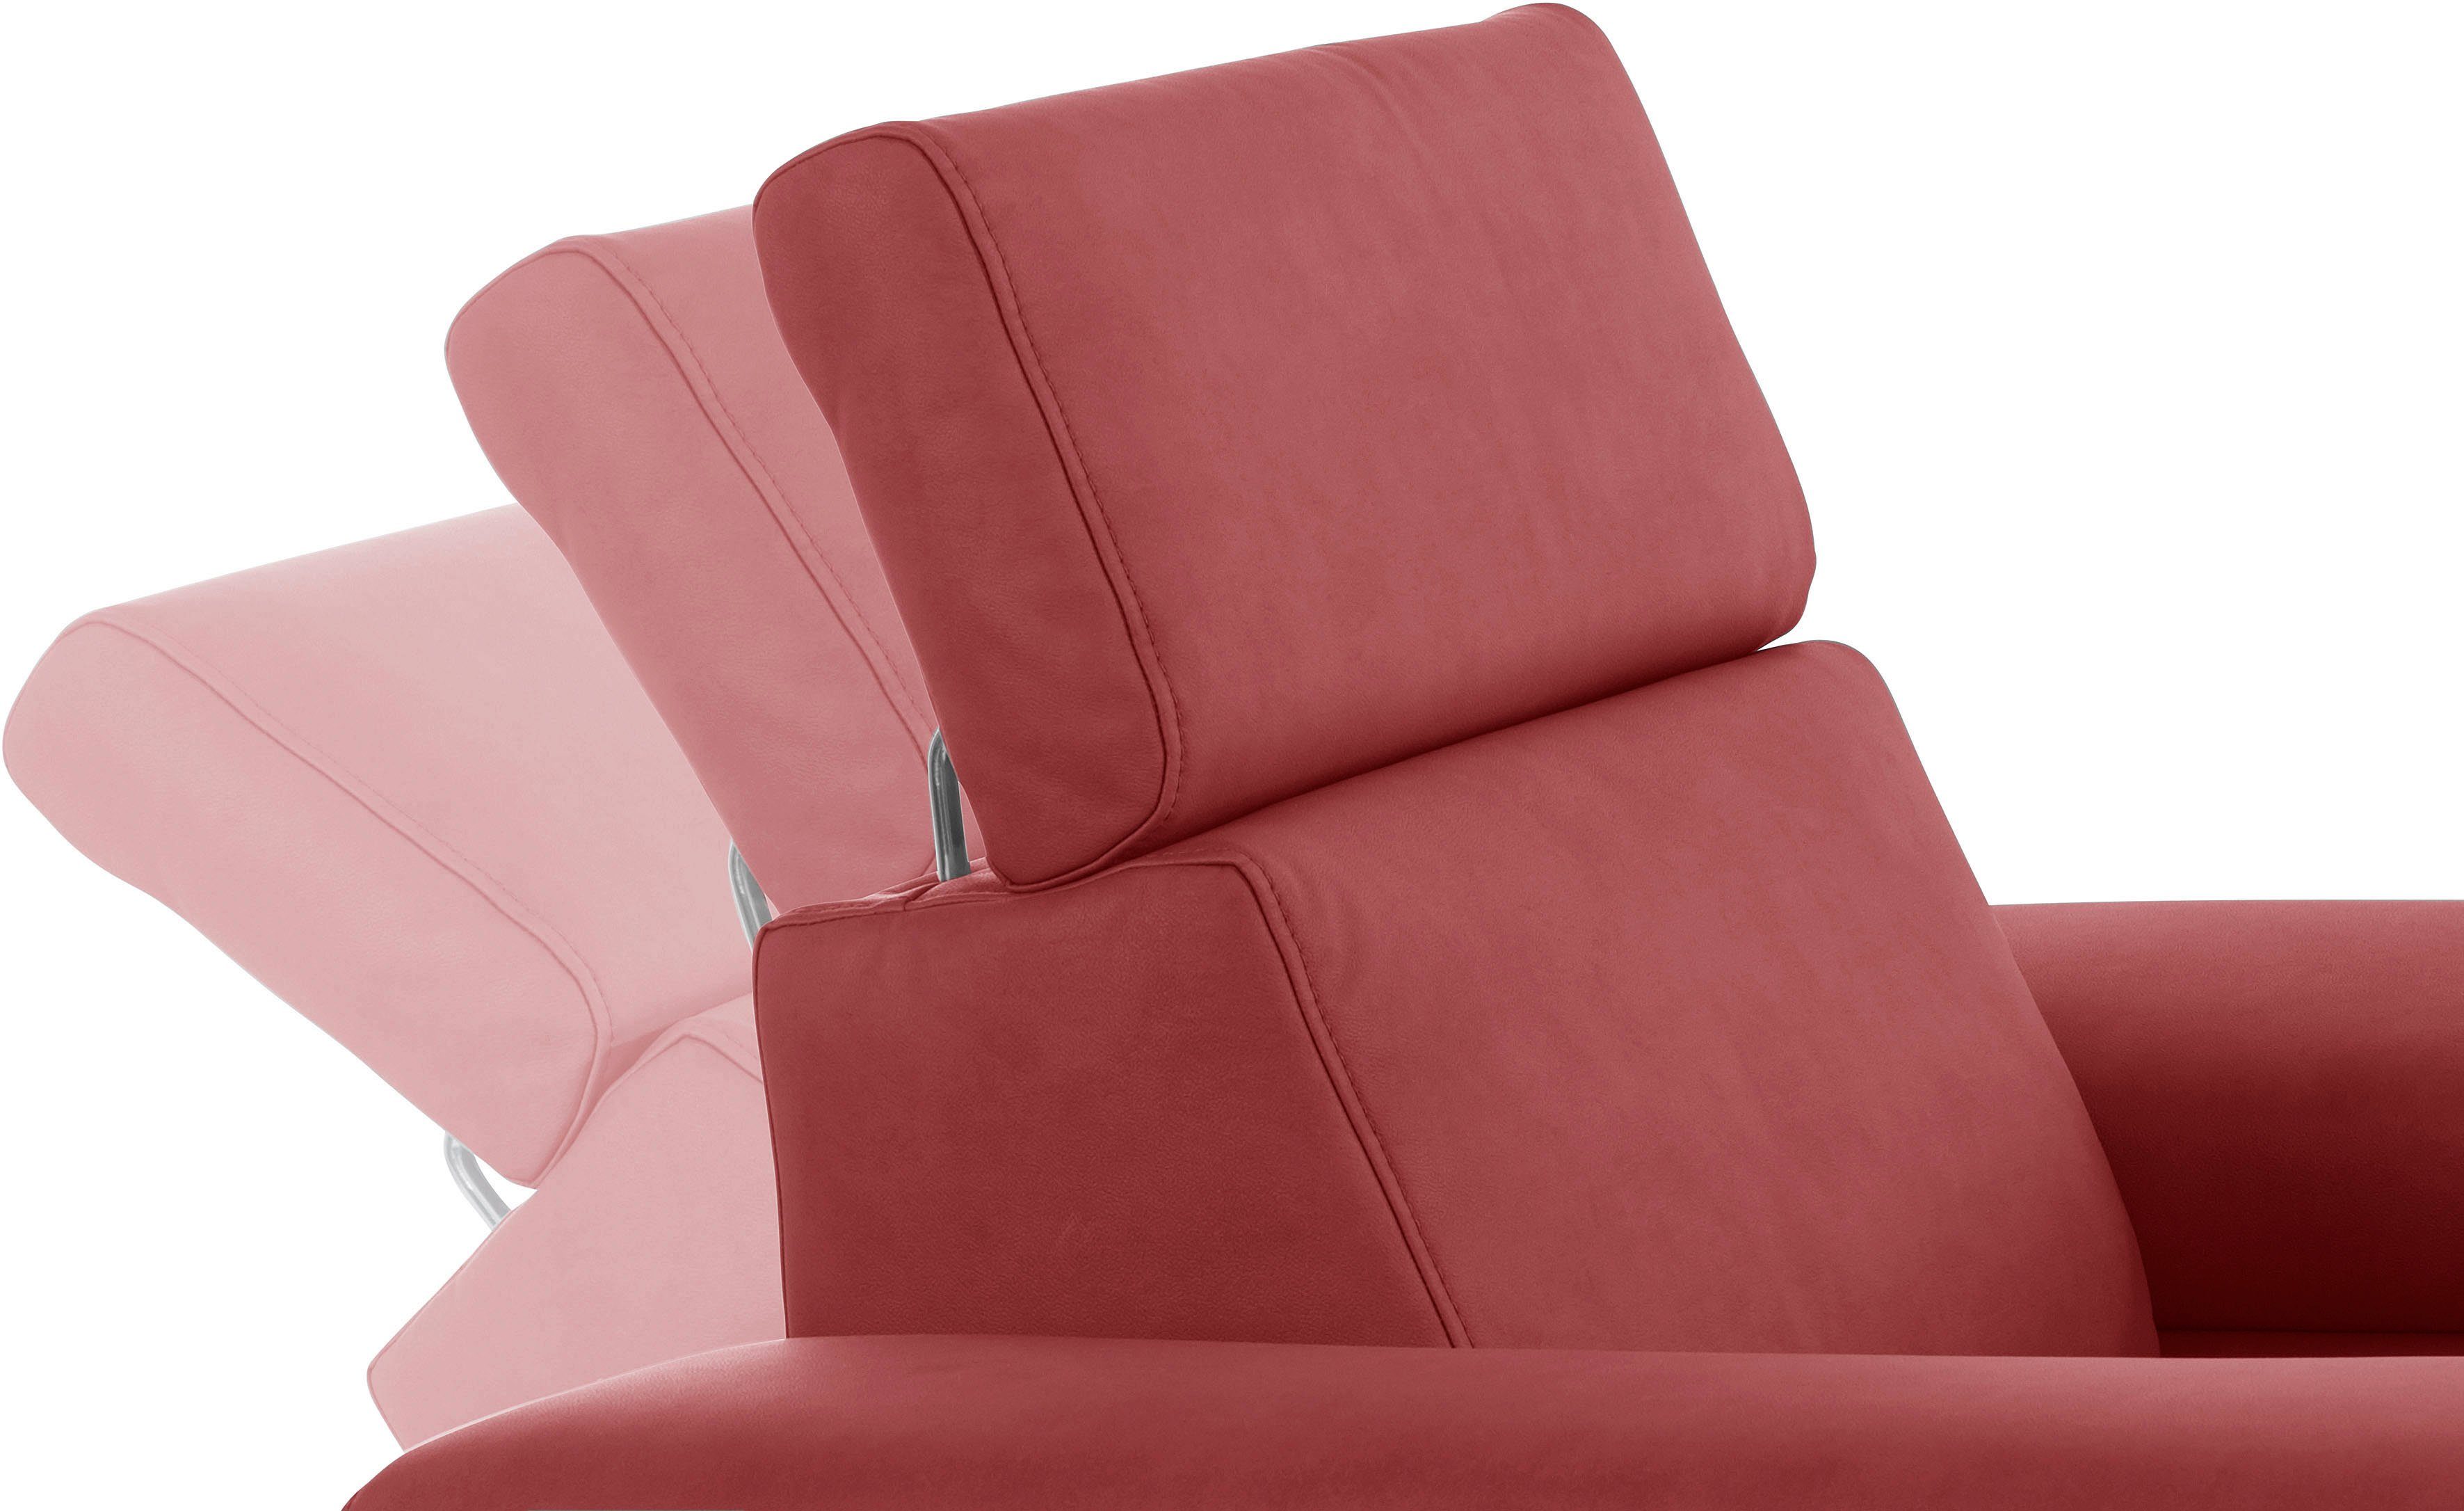 Places of Style Sessel wahlweise Trapino Luxus-Microfaser Luxus, mit in Lederoptik Rückenverstellung